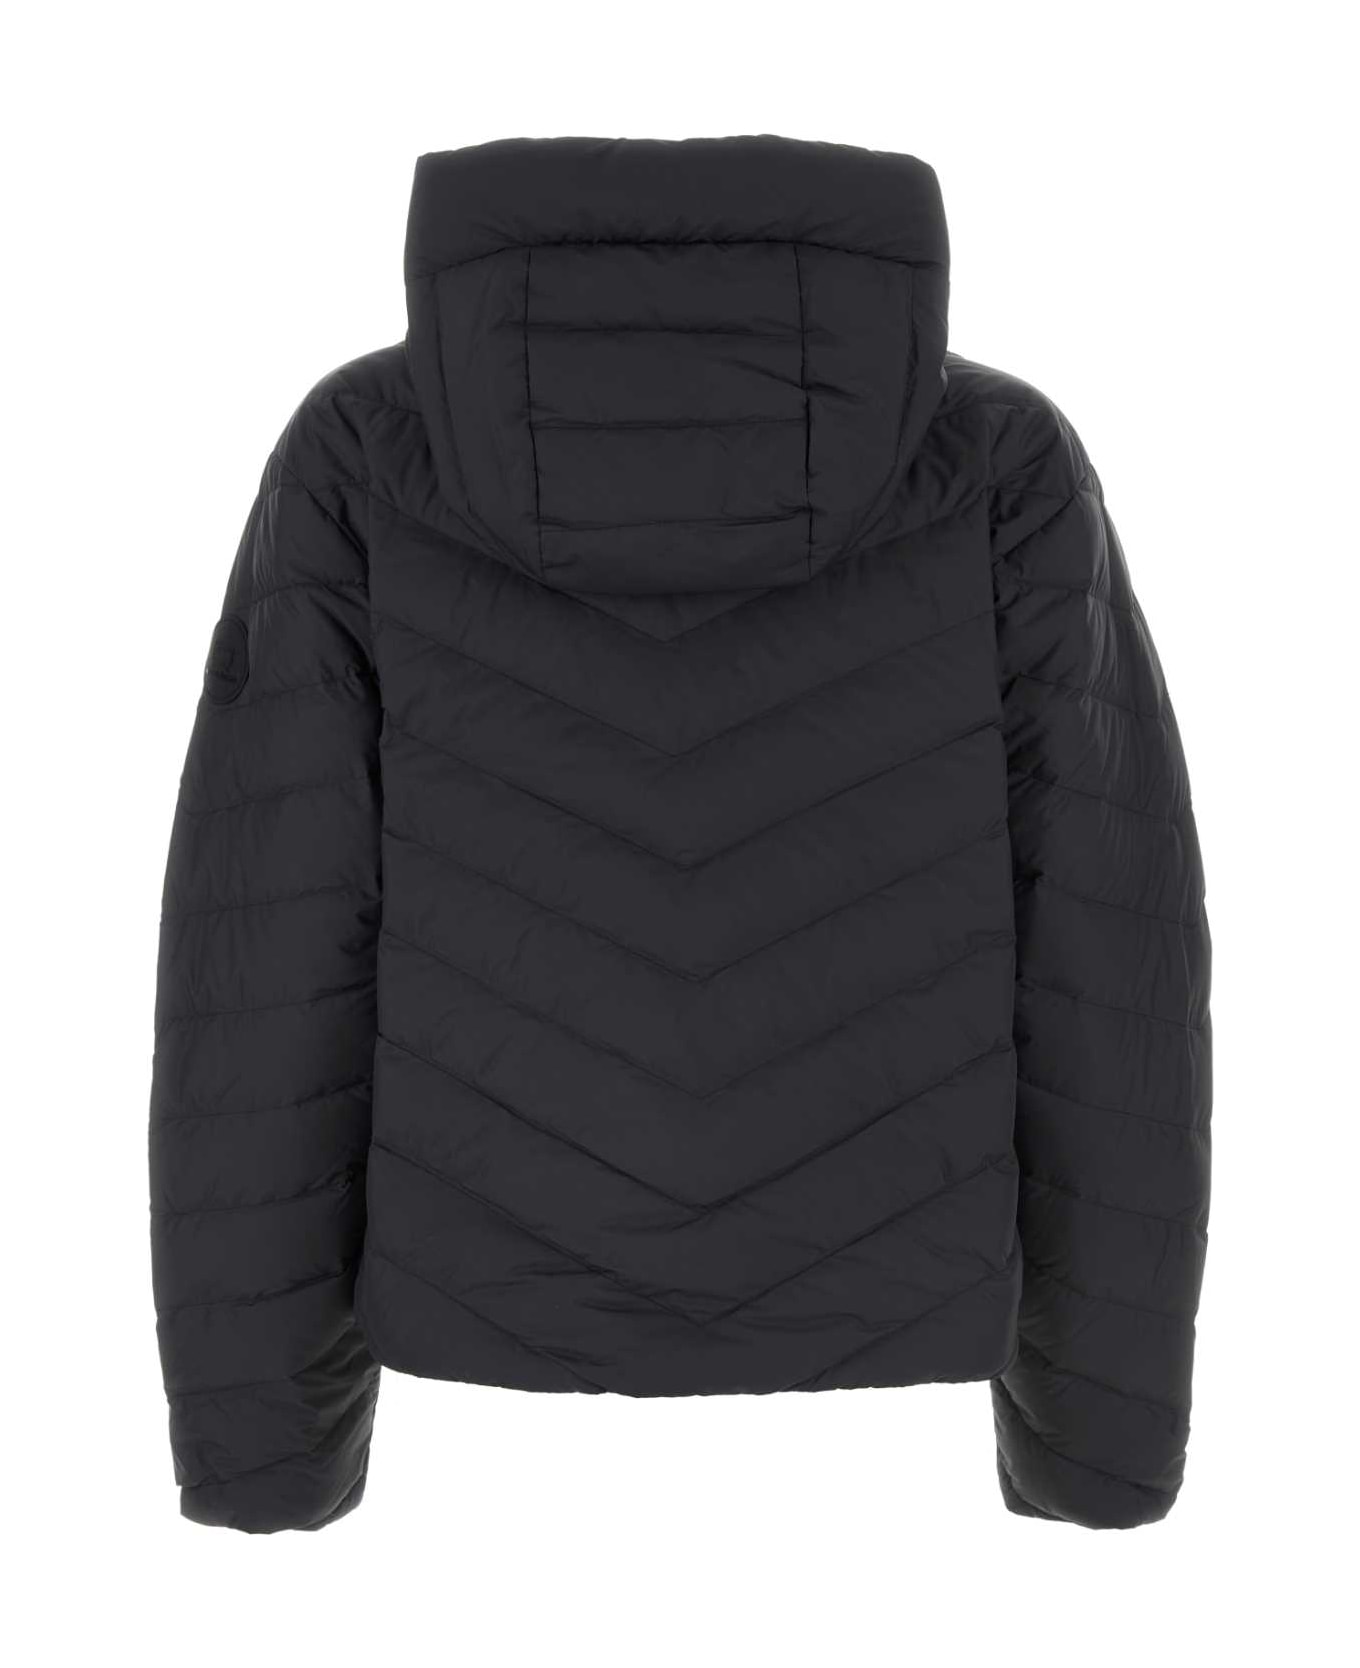 Woolrich Black Polyester Down Jacket - Black